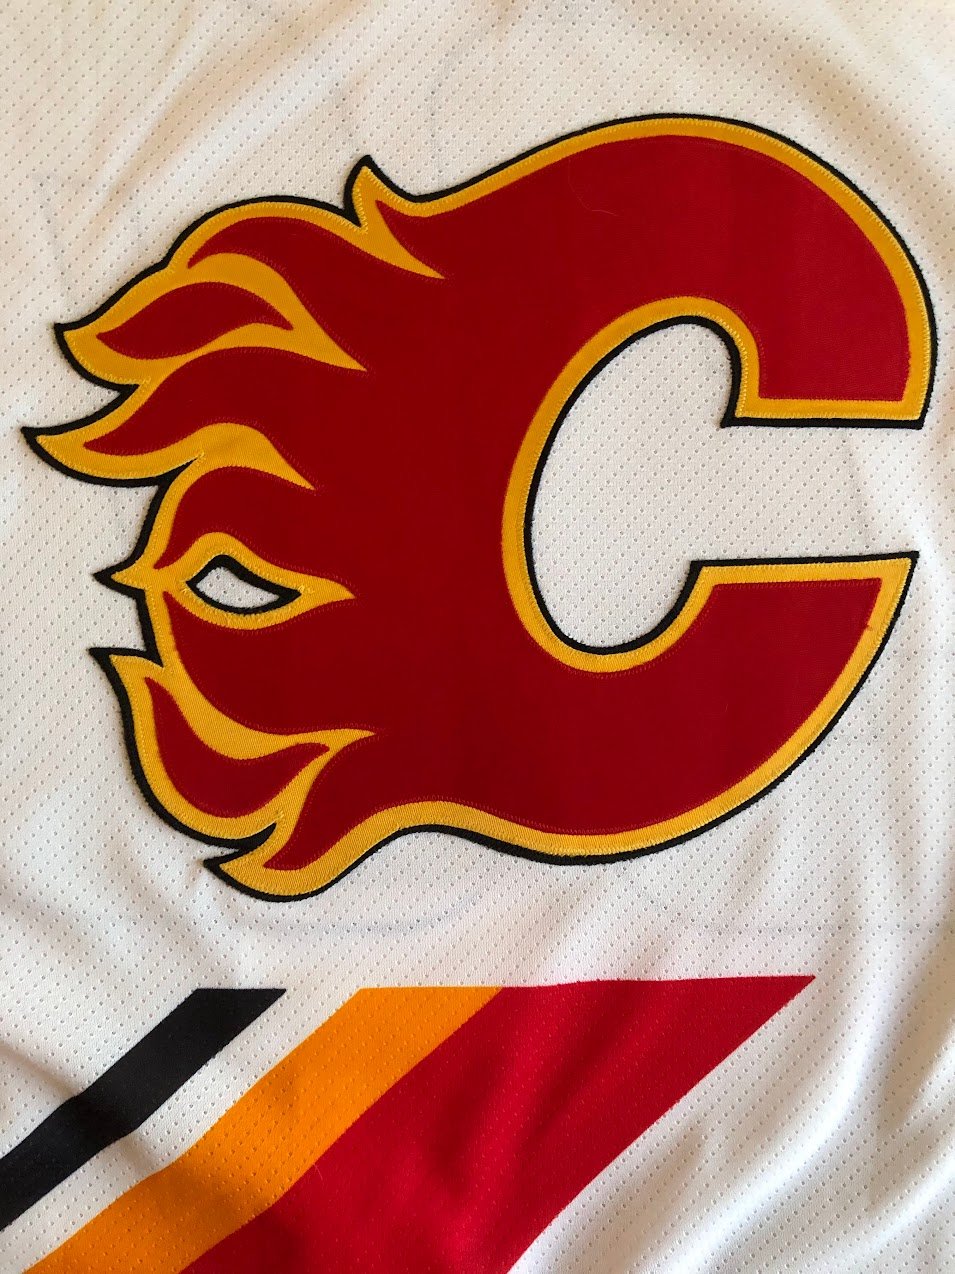 Calgary Flames Dwayne Roloson CCM Brand New Sz. 52 — Top Shelf Threadz